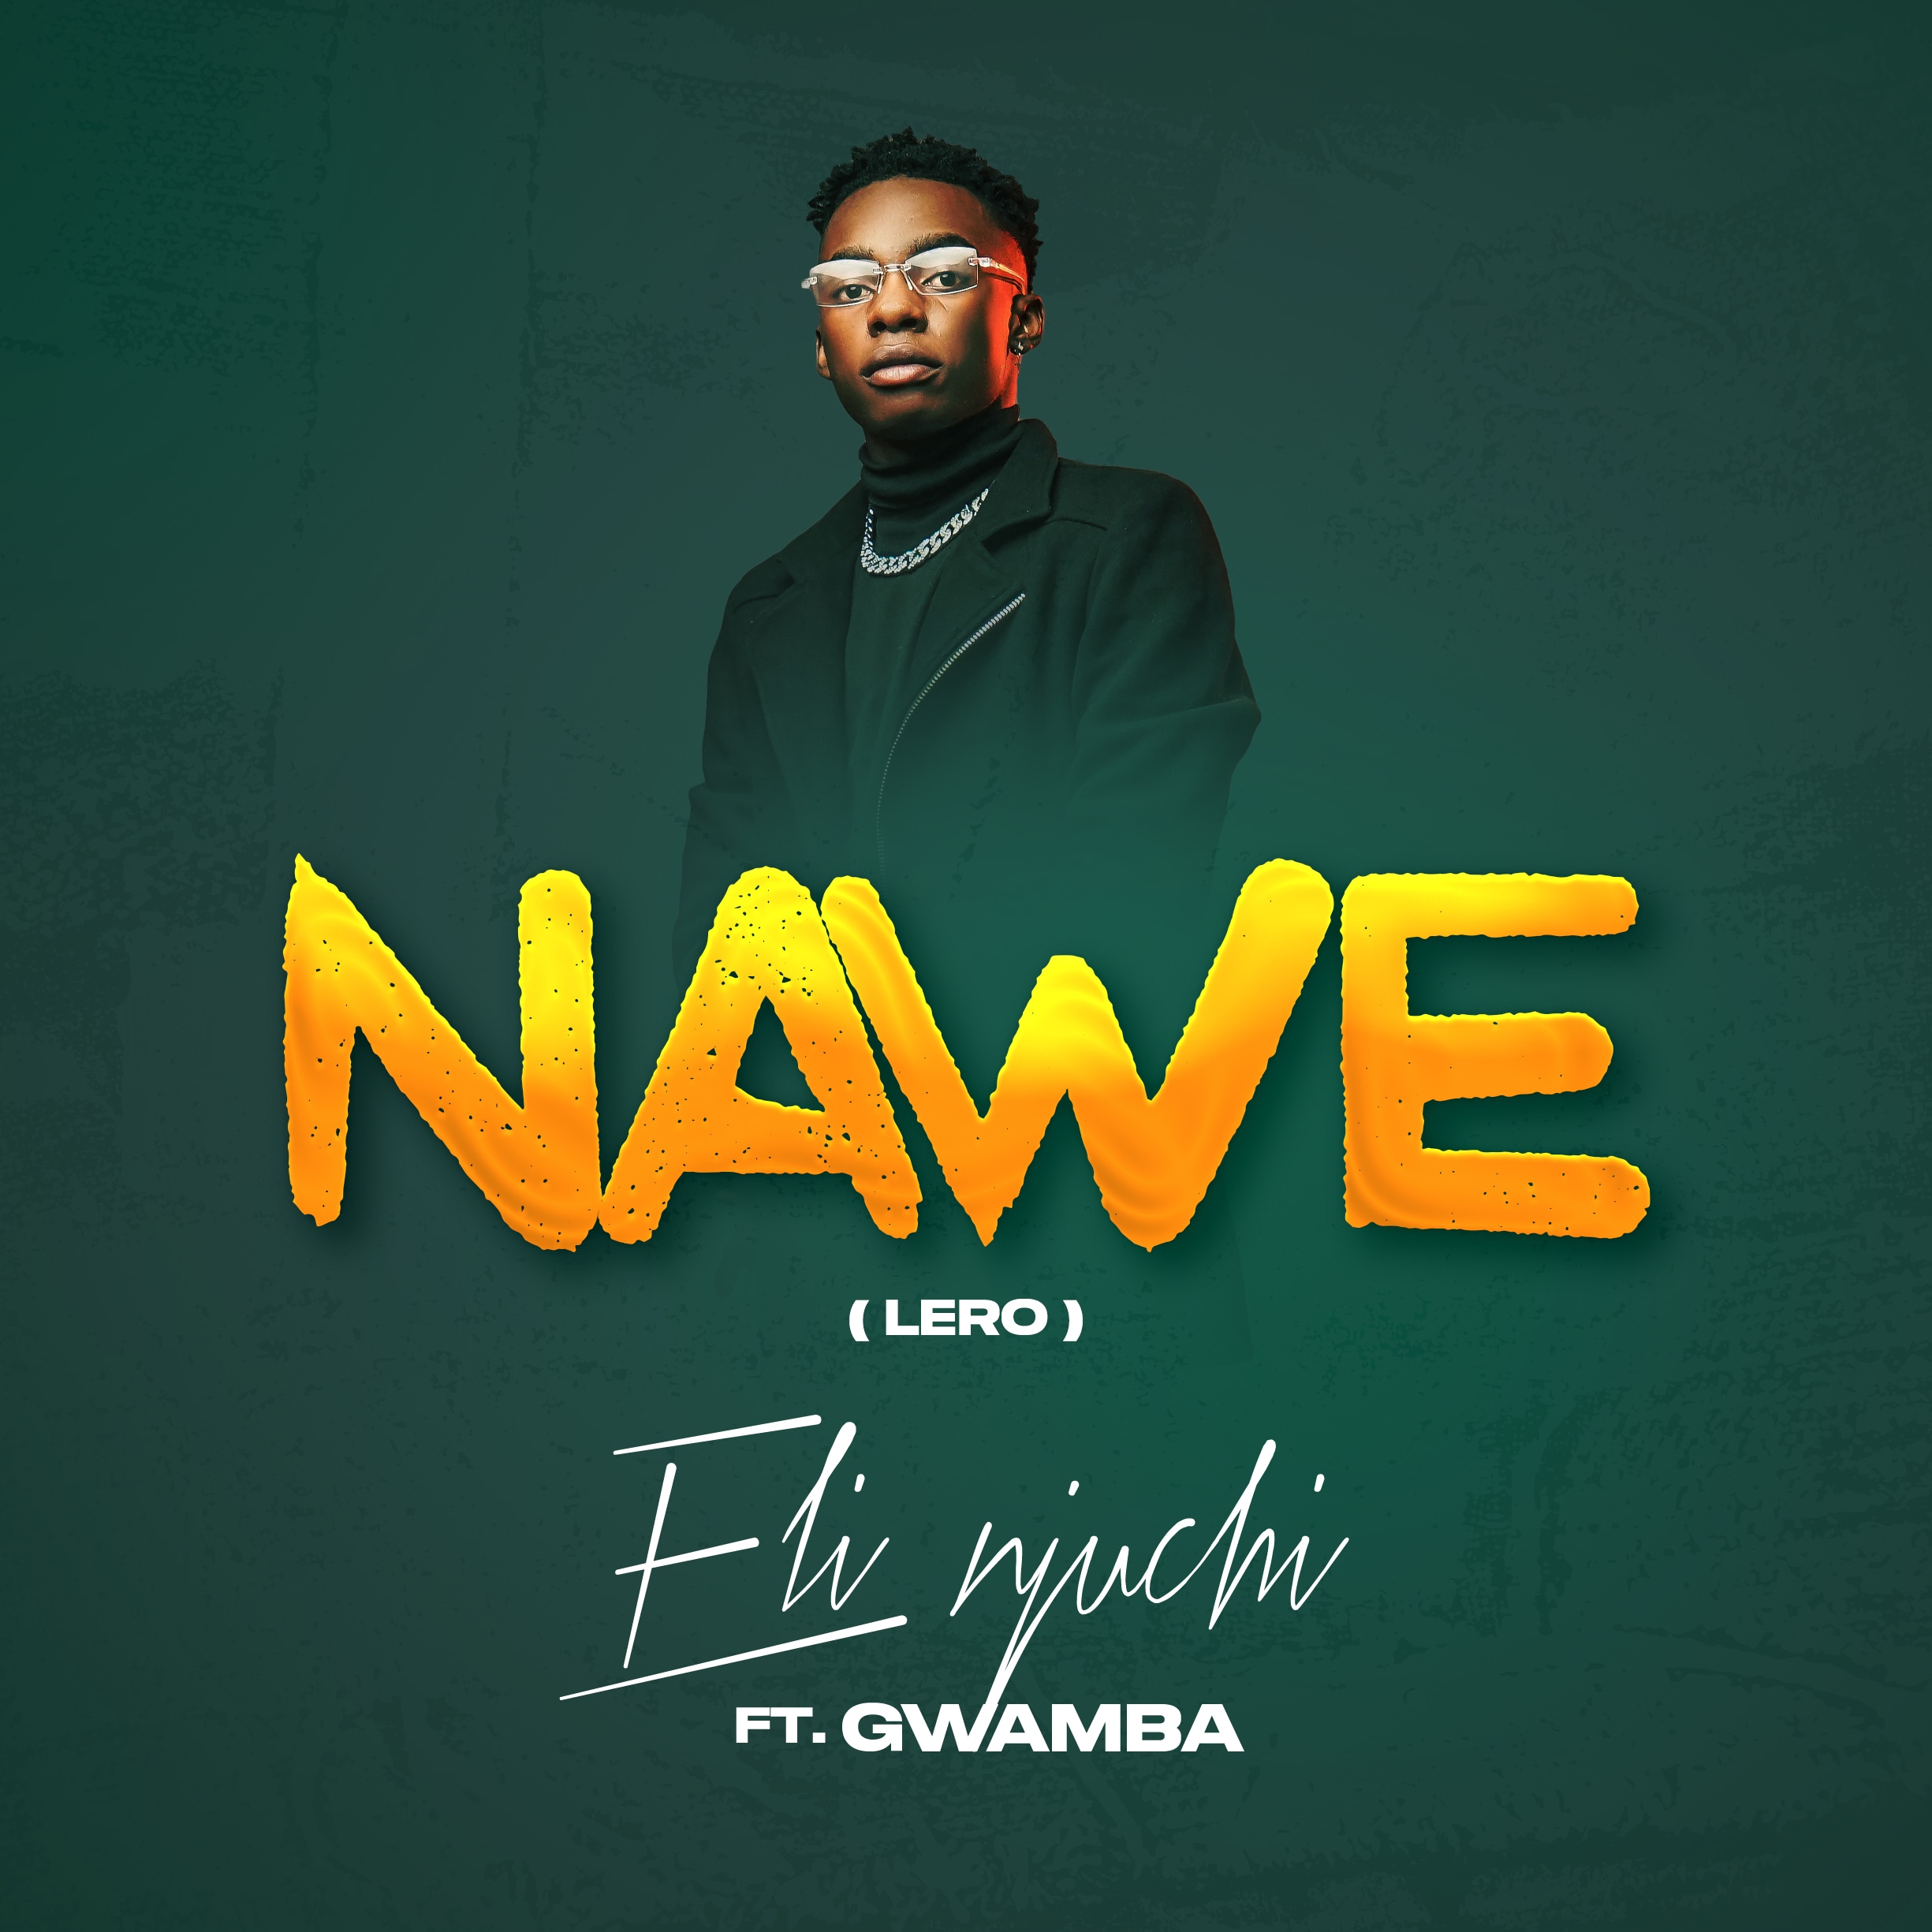 Eli-njuchi-Nawe-Lero-feat-Gwamba-Prod-by-BFB-Sispence